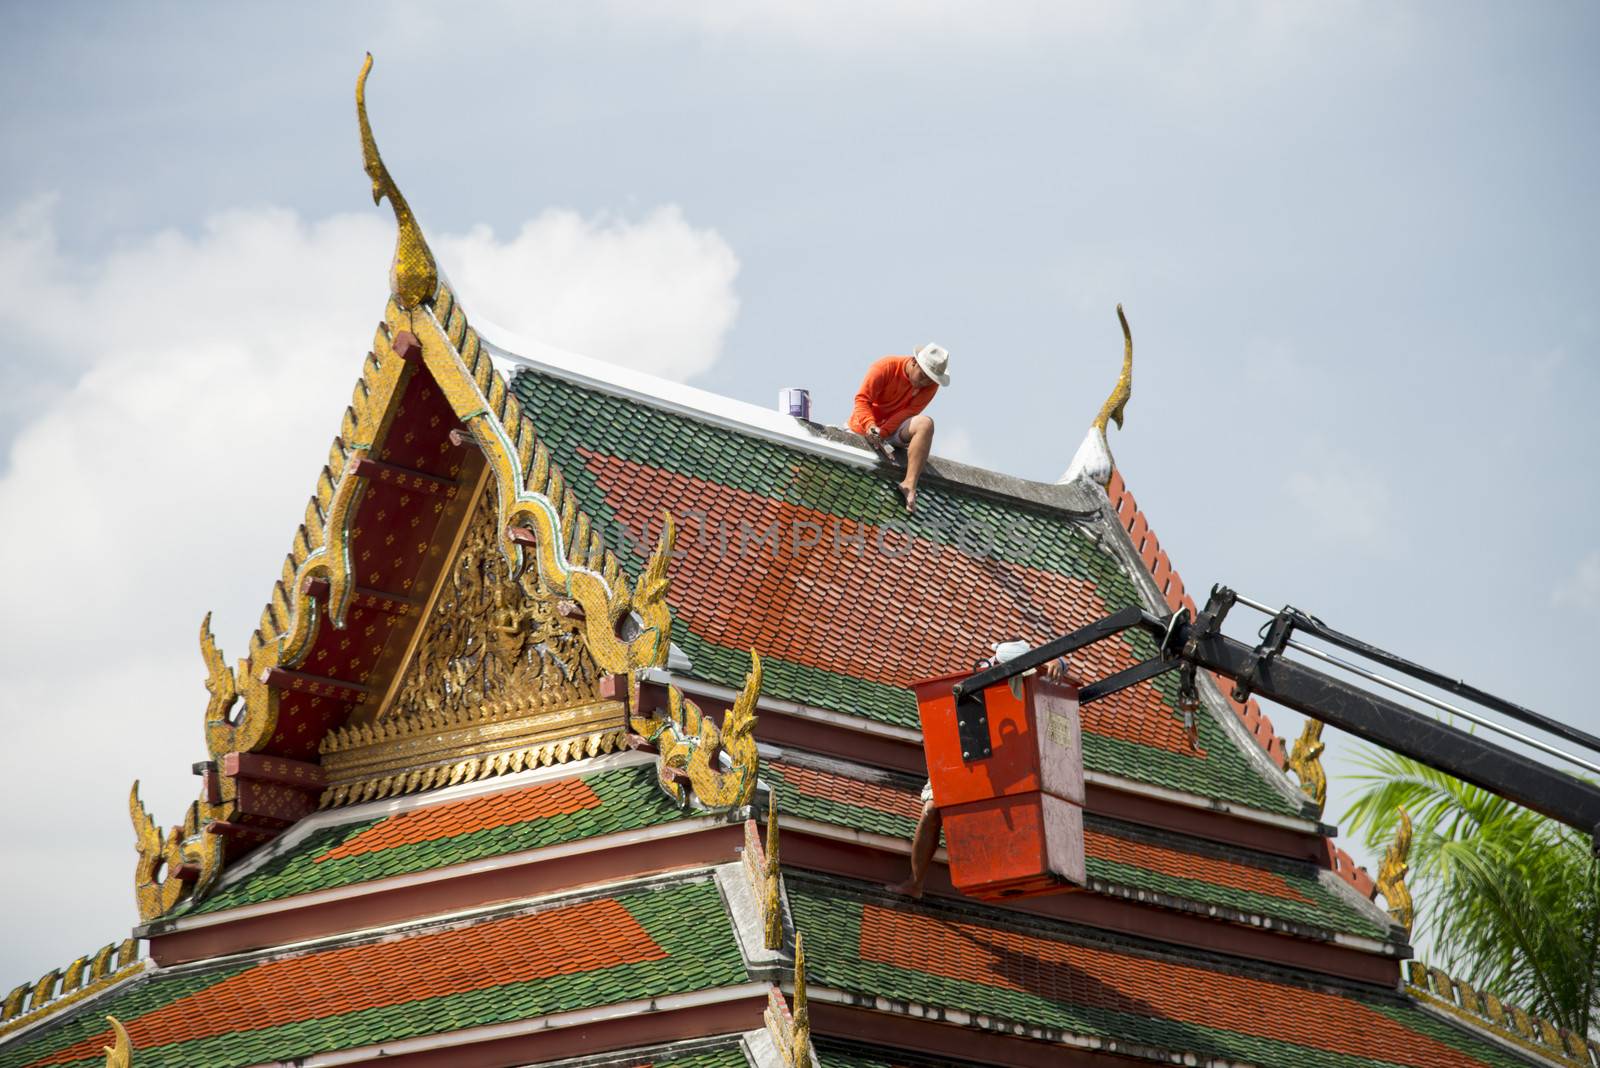 Men repair roof of Temple2 by gjeerawut